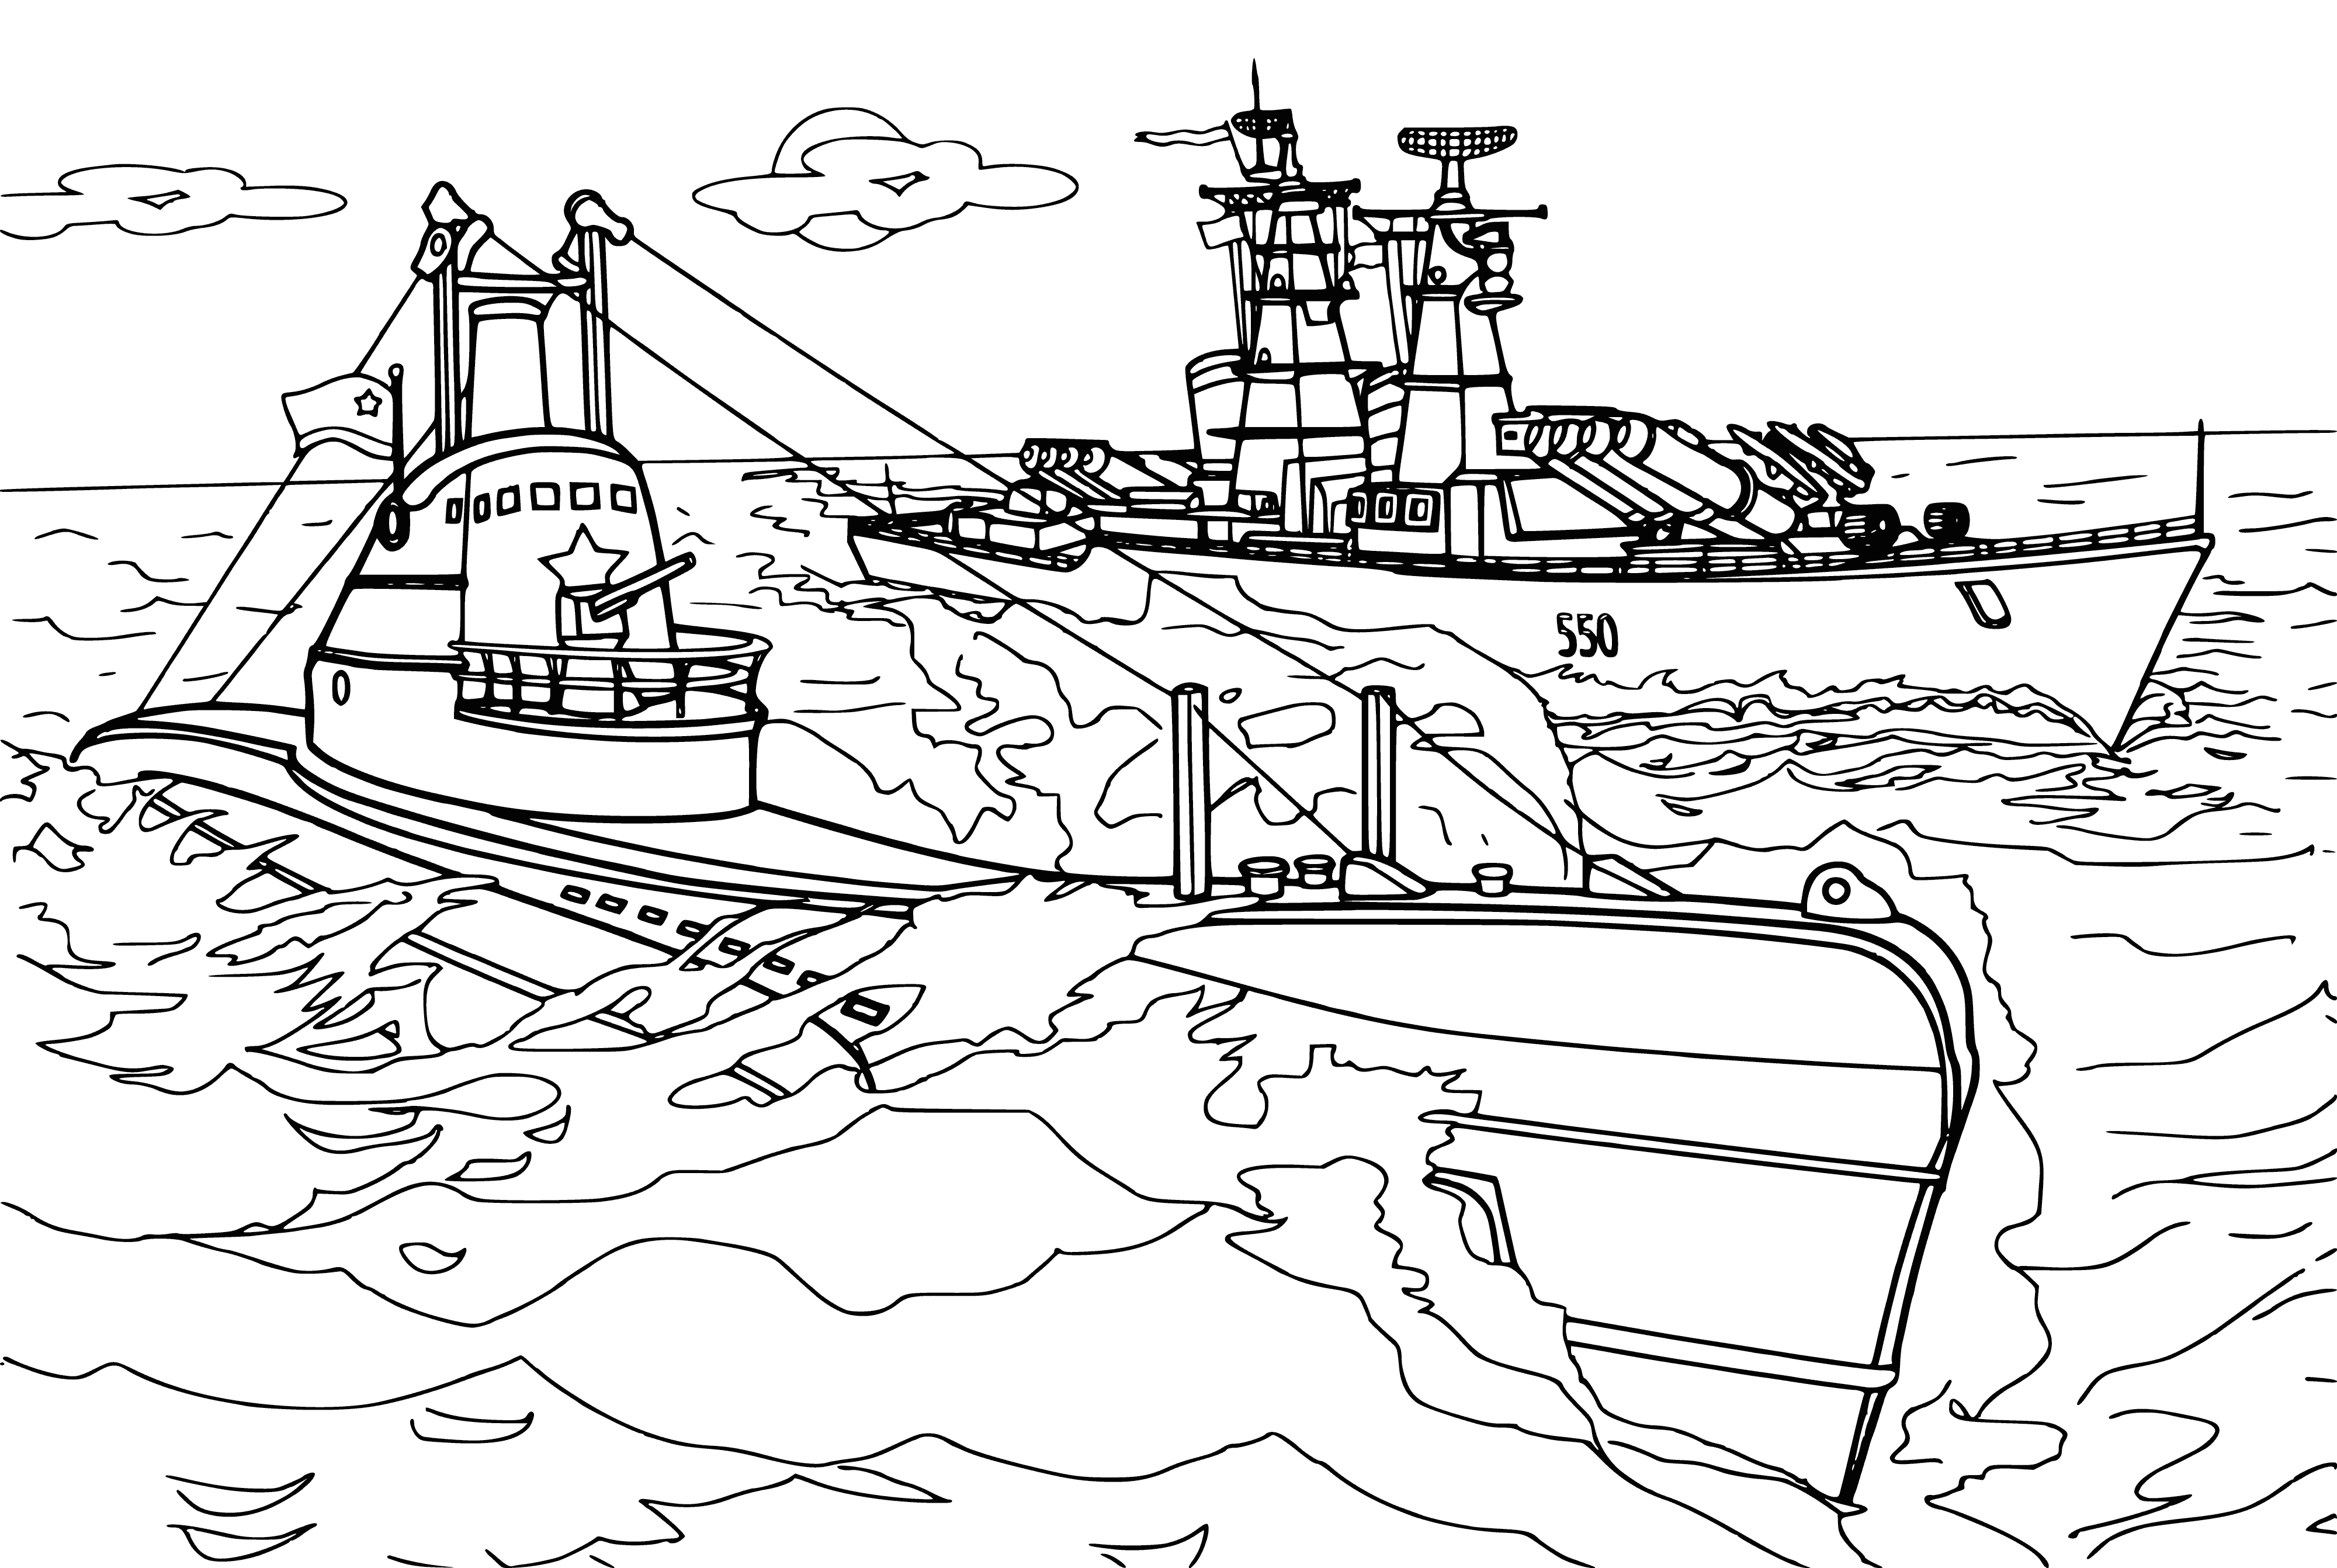 Okręt podwodny Sch-402 kolorowanka